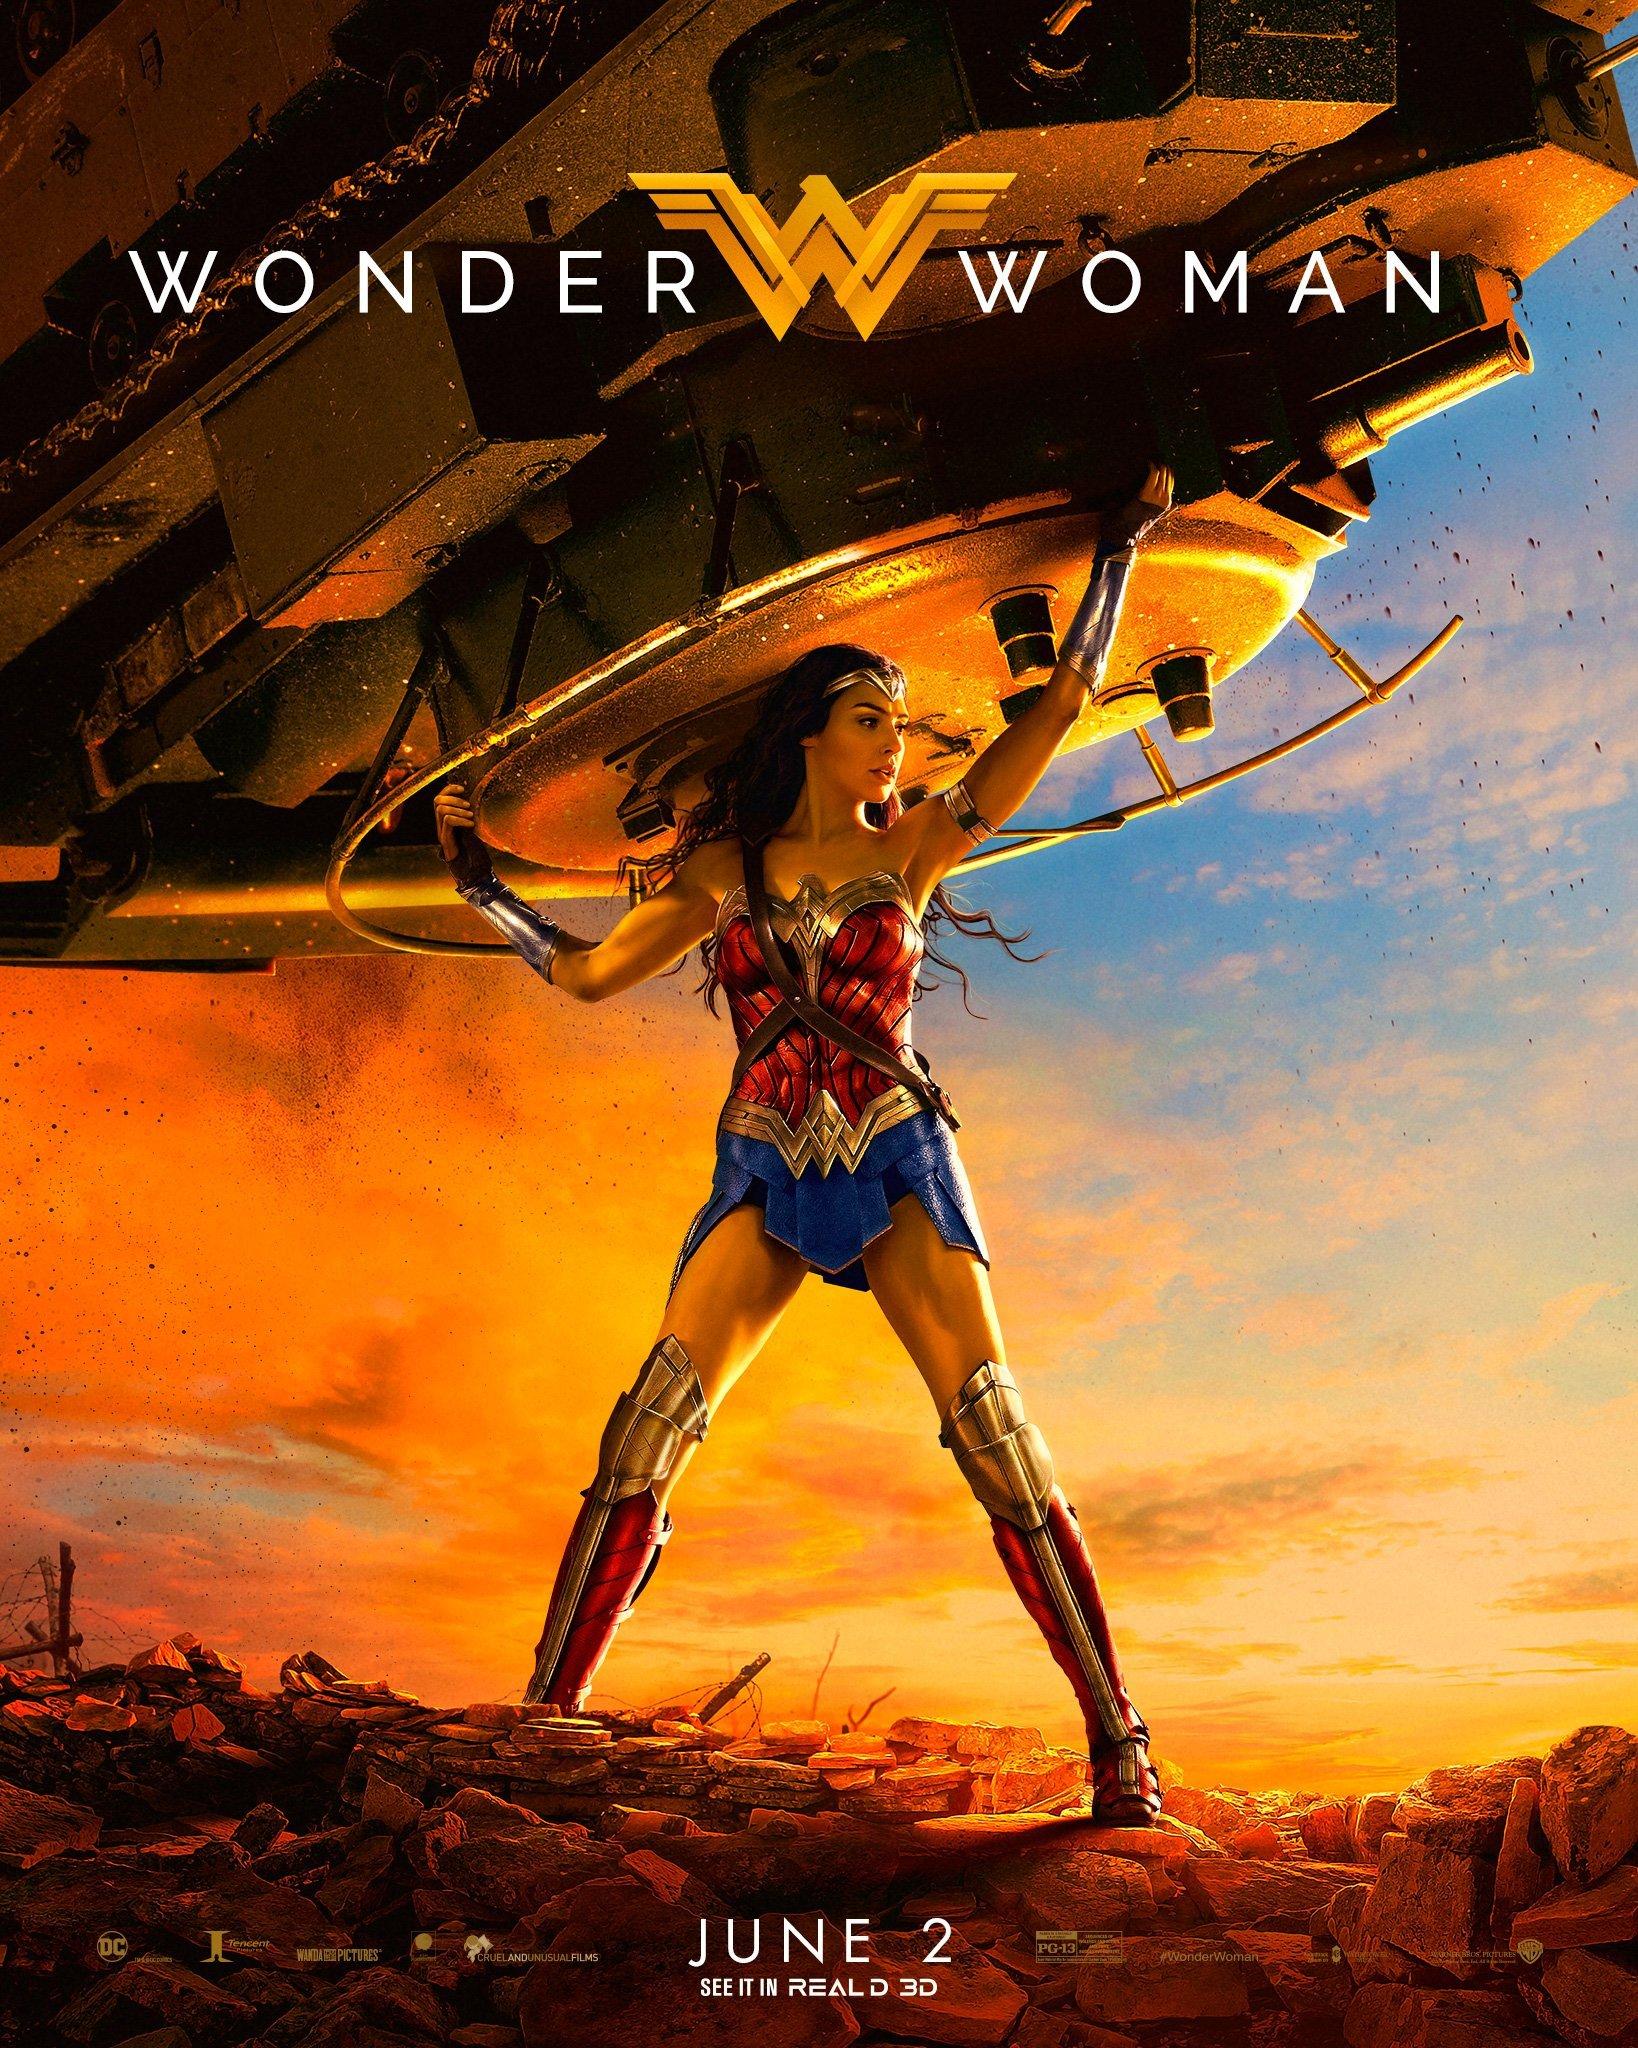 Gal Gadot lifts a tank in cool new 'Wonder Woman' poster